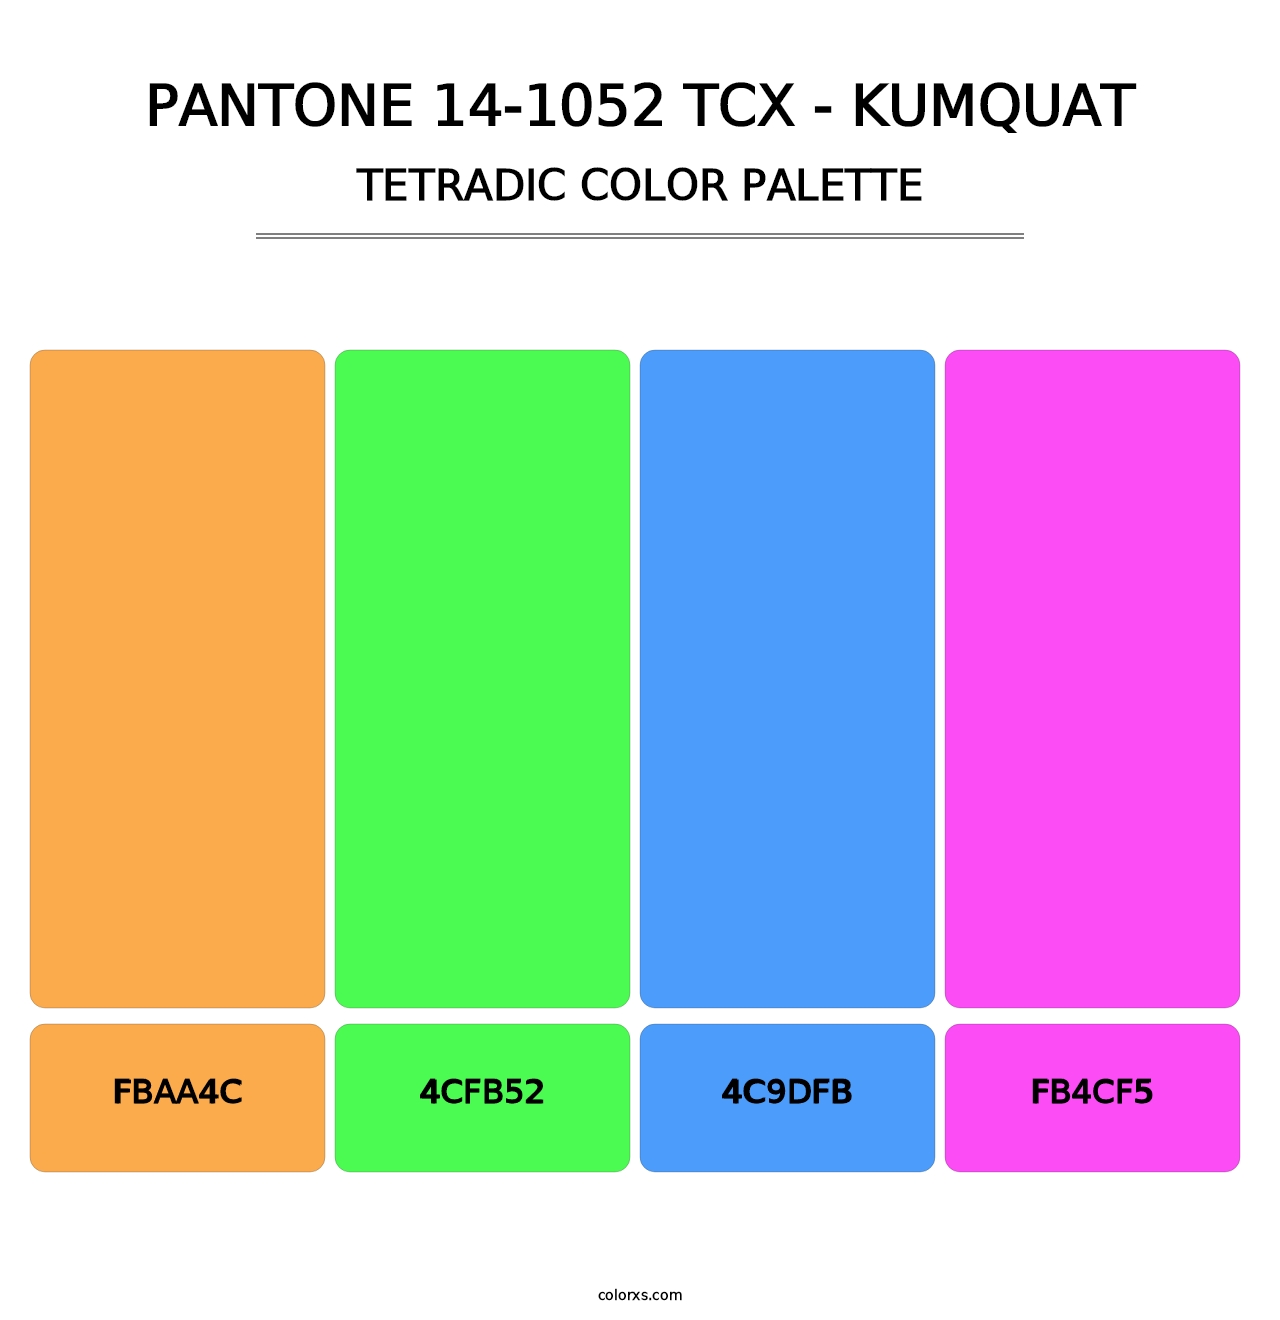 PANTONE 14-1052 TCX - Kumquat - Tetradic Color Palette